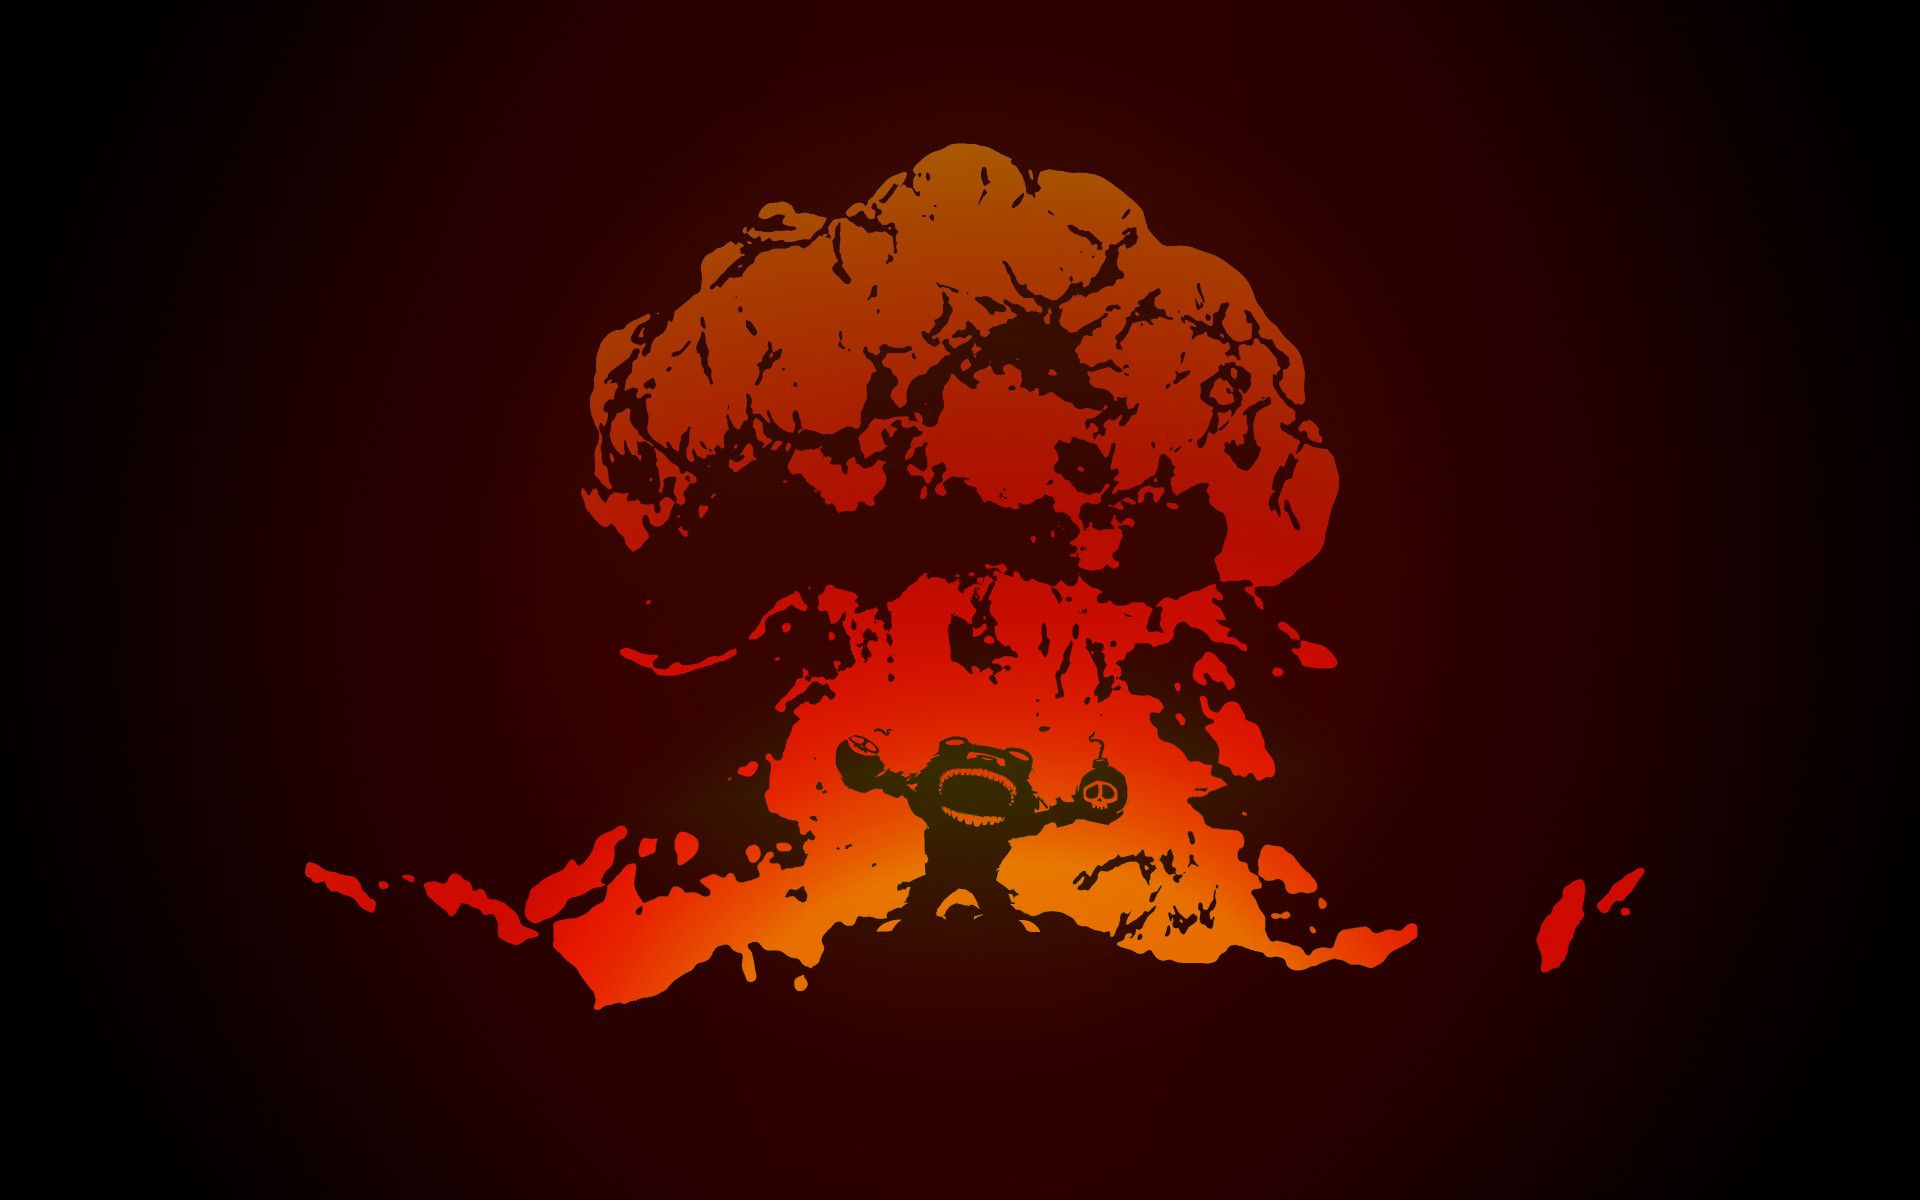 League of Legends Teemo Explosion Mushroom Cloud wallpaper